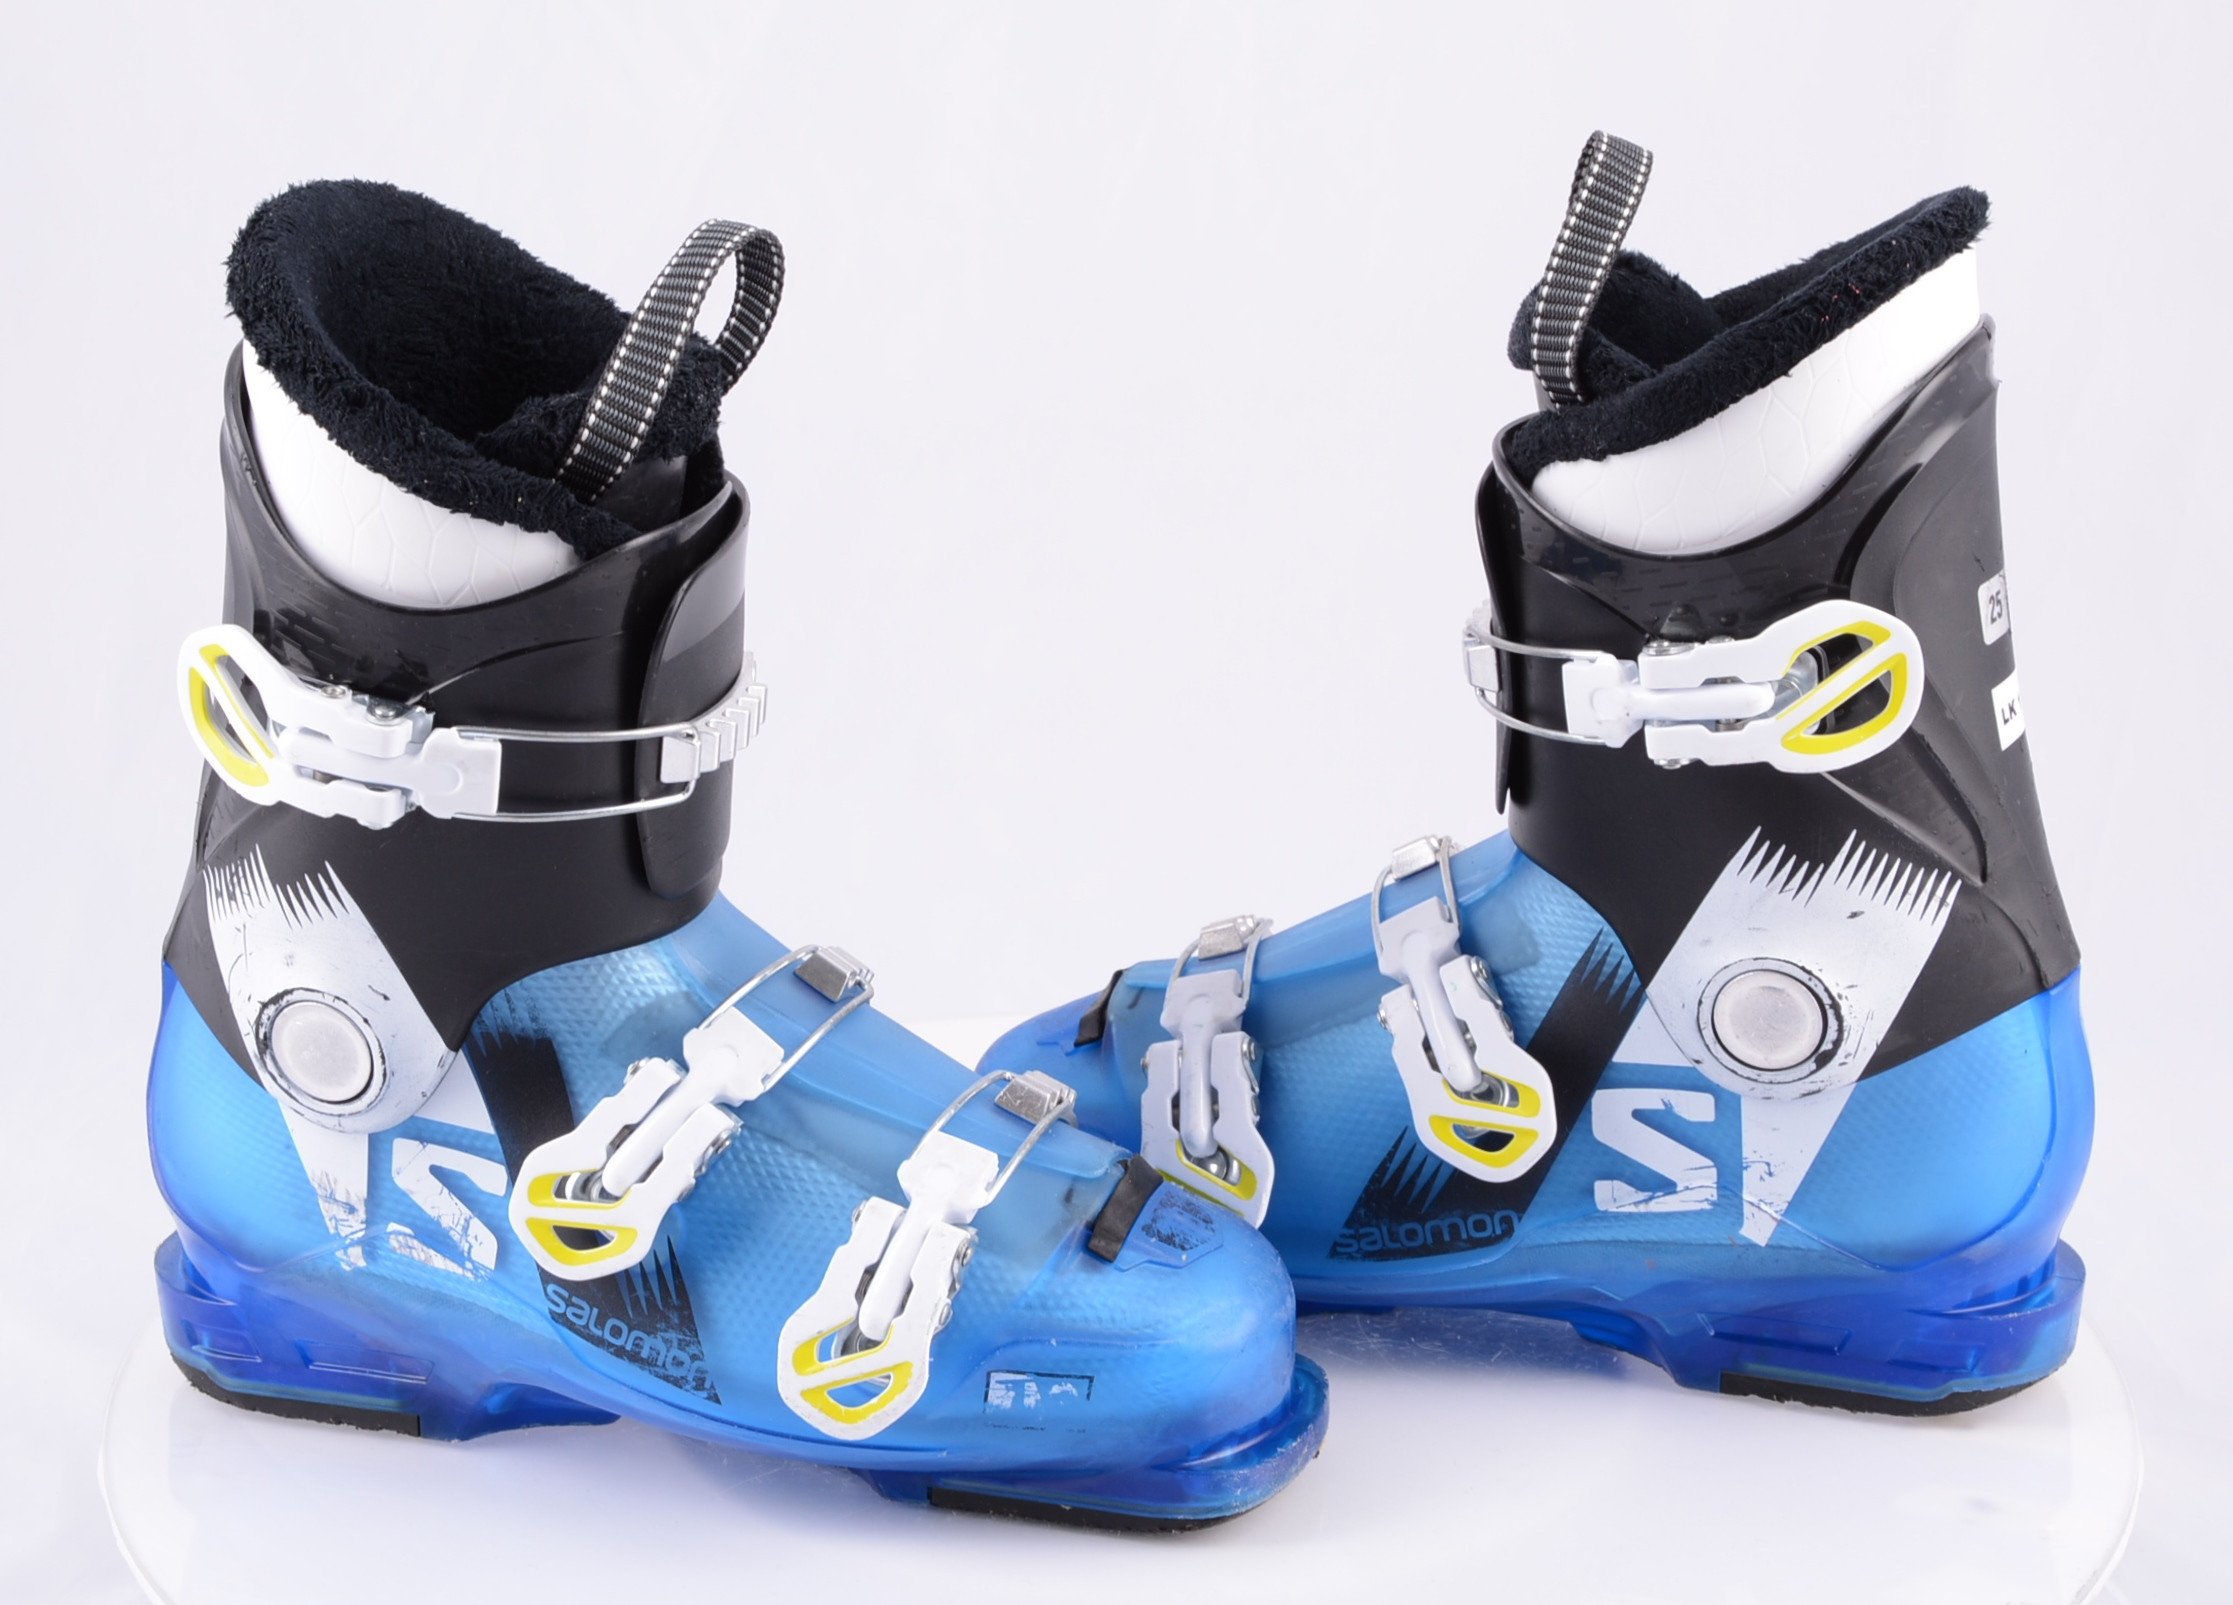 Salomon Team T3 Junior Ski Boots in BlueBlack.jpg